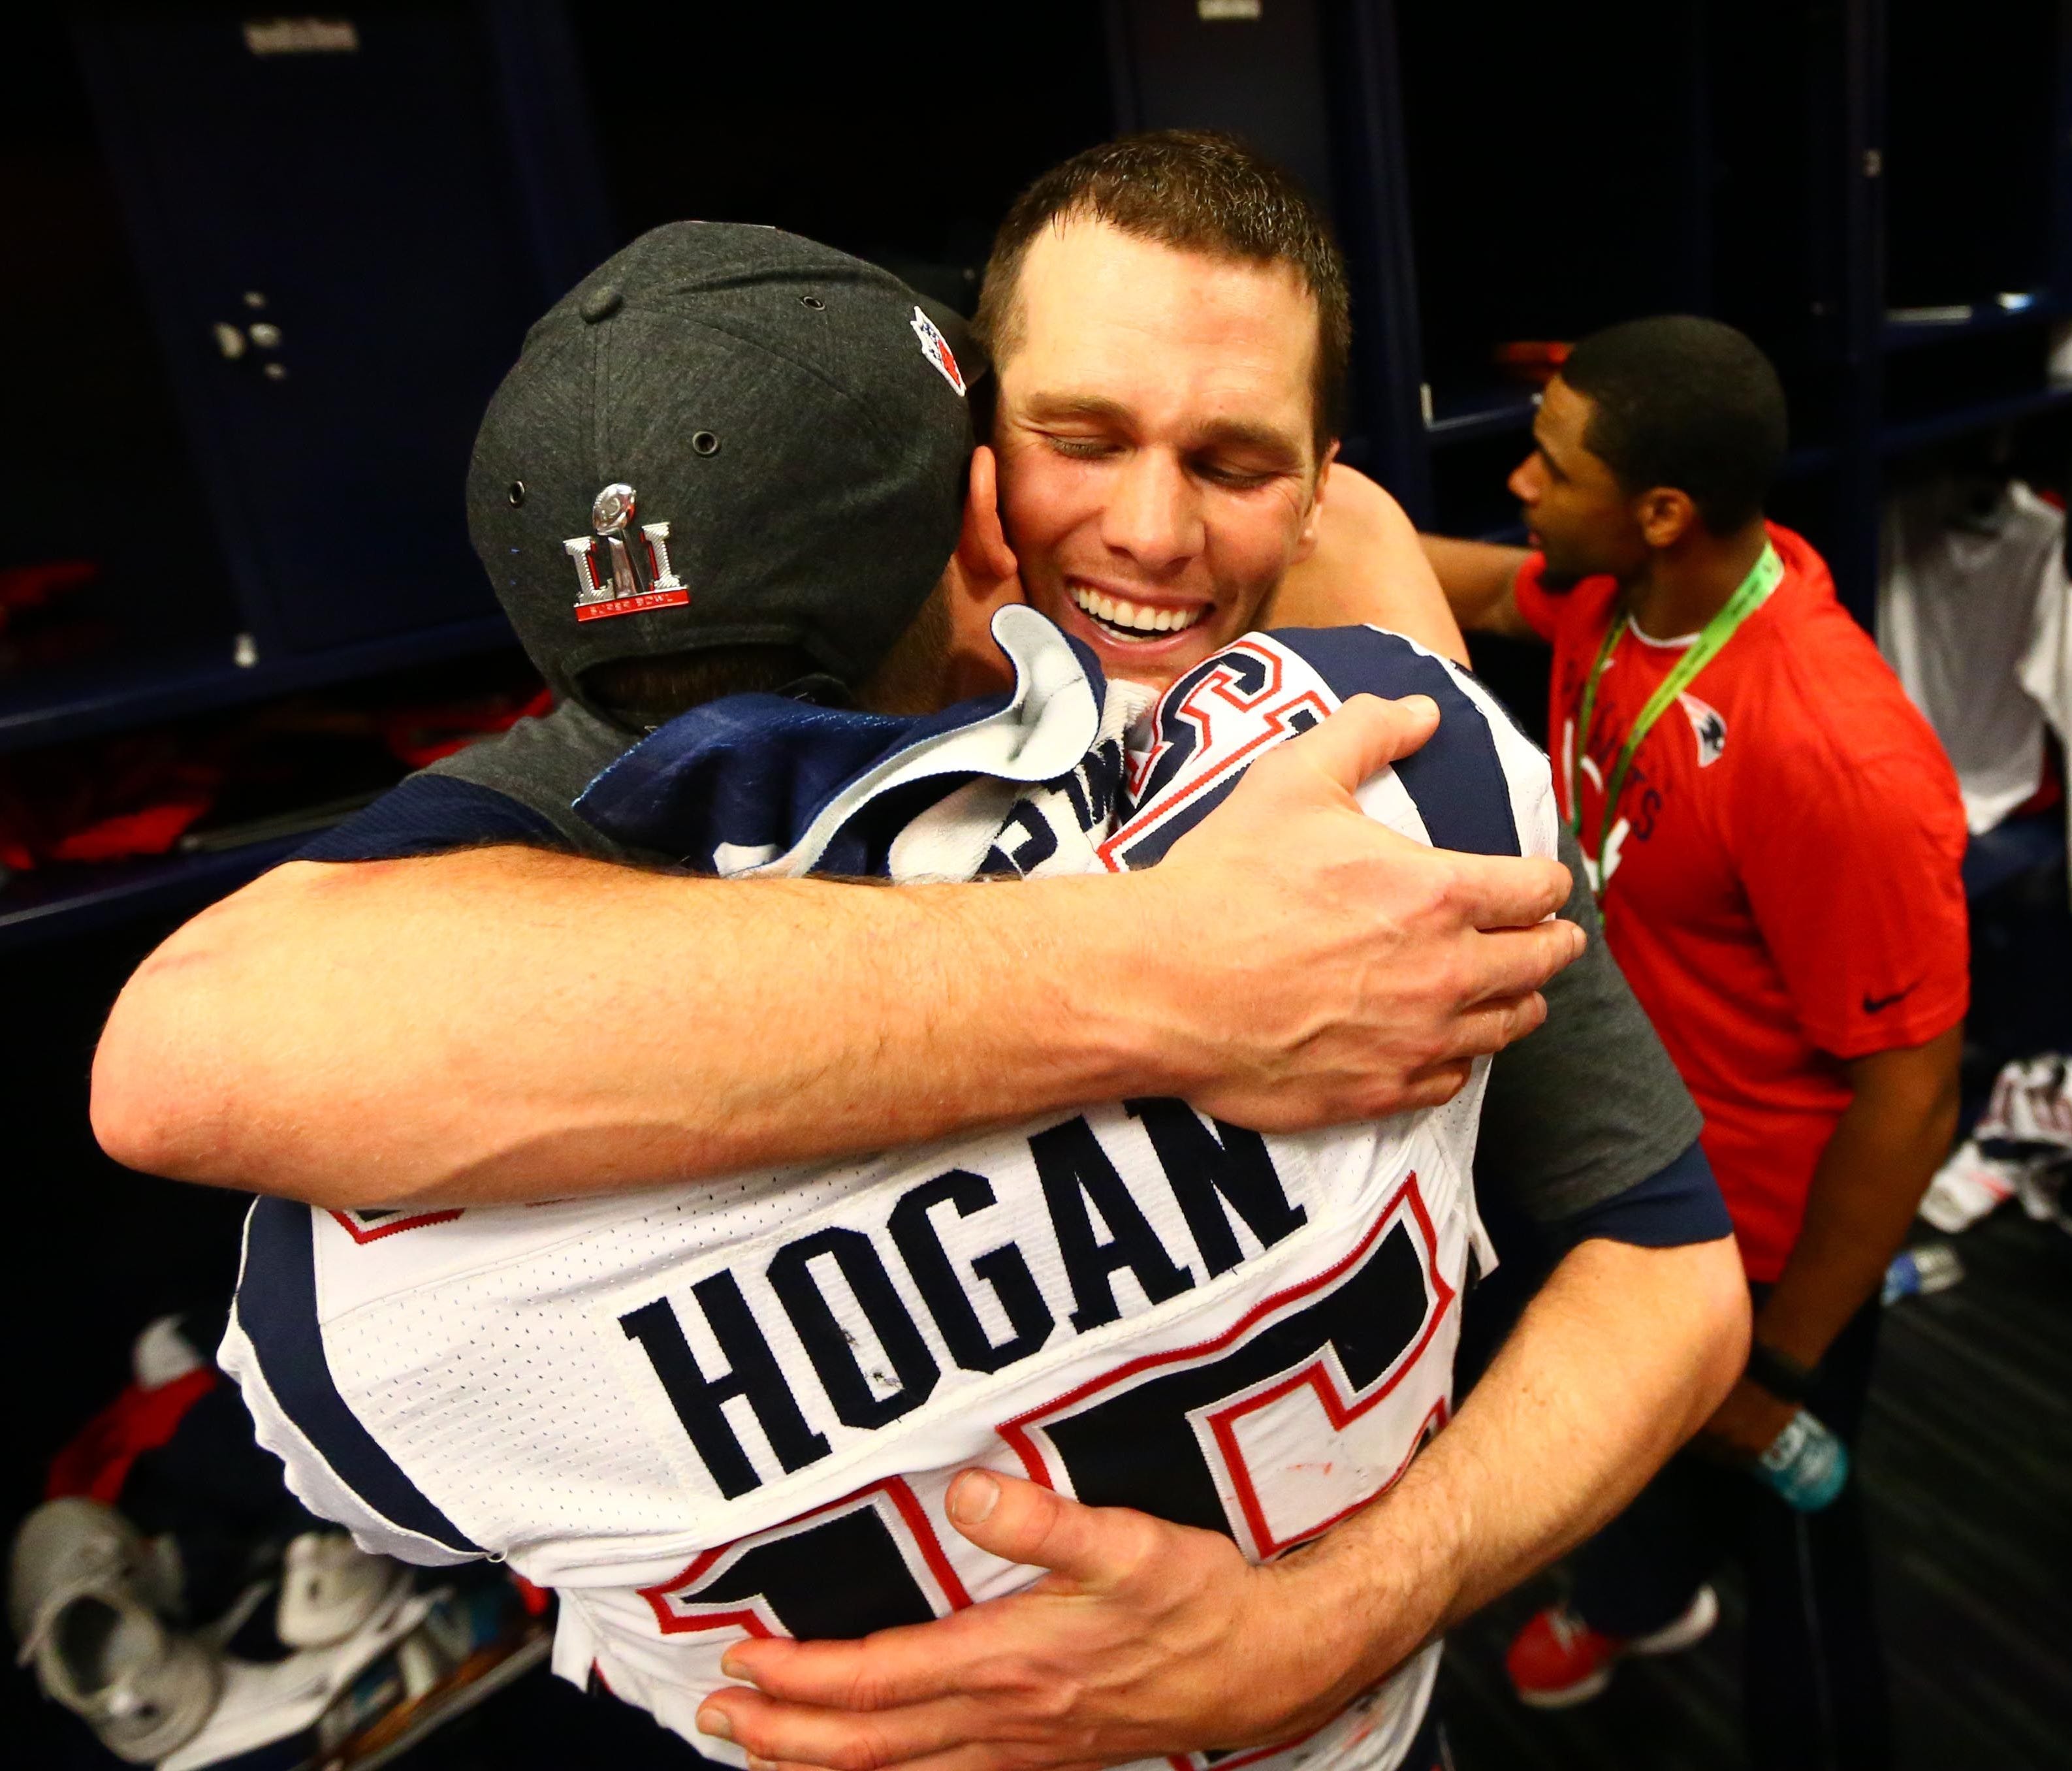 Tom Brady embraces Chris Hogan in the locker room after winning Super Bowl LI.